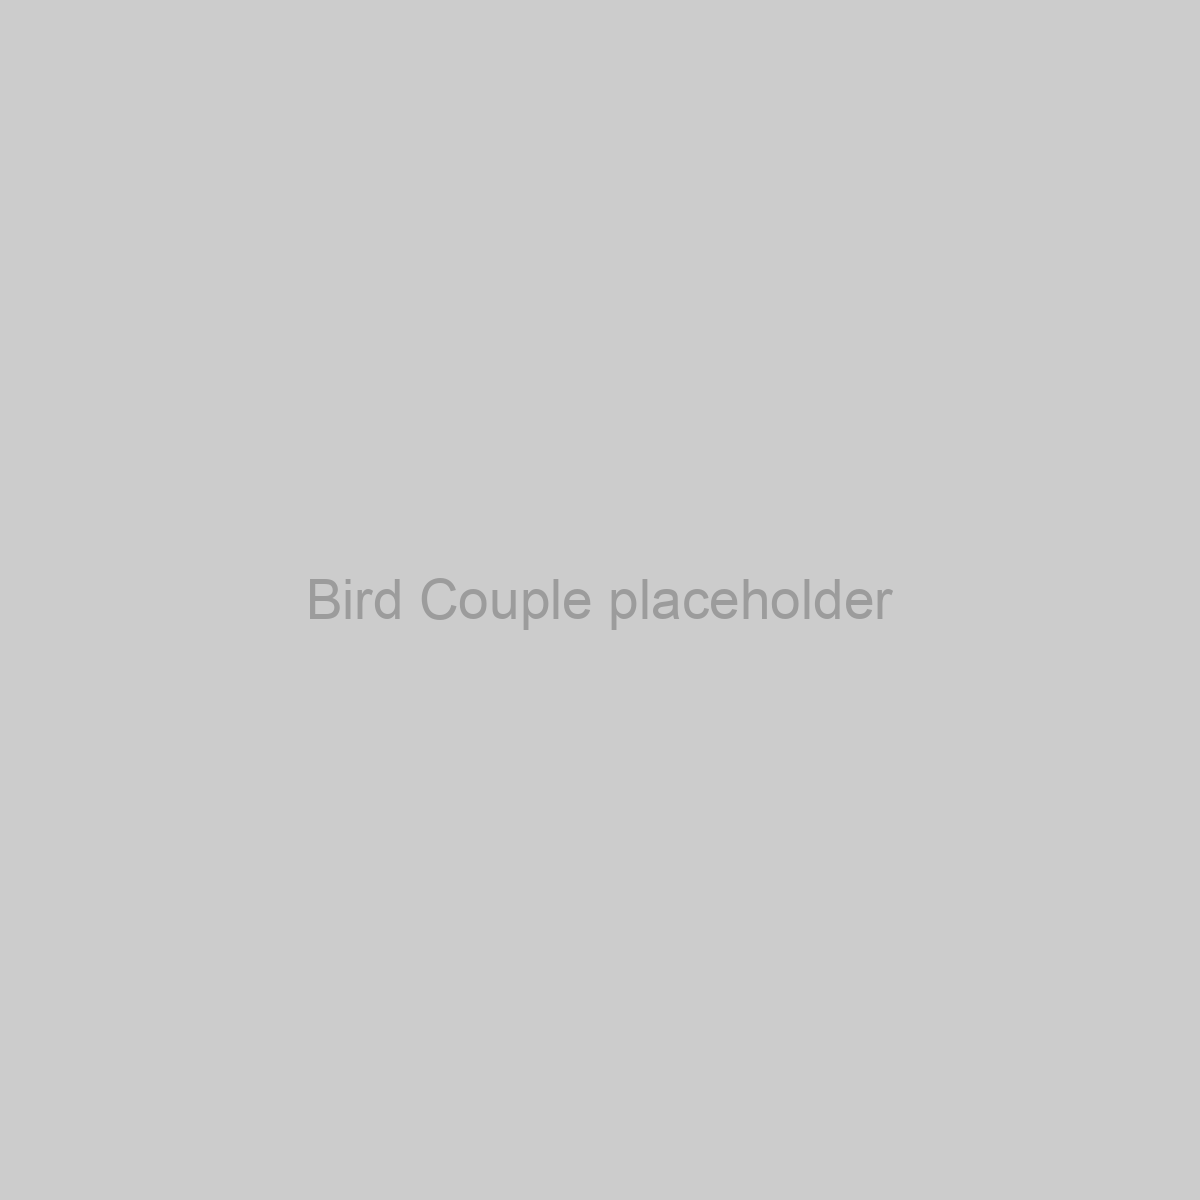 Bird Couple Placeholder Image